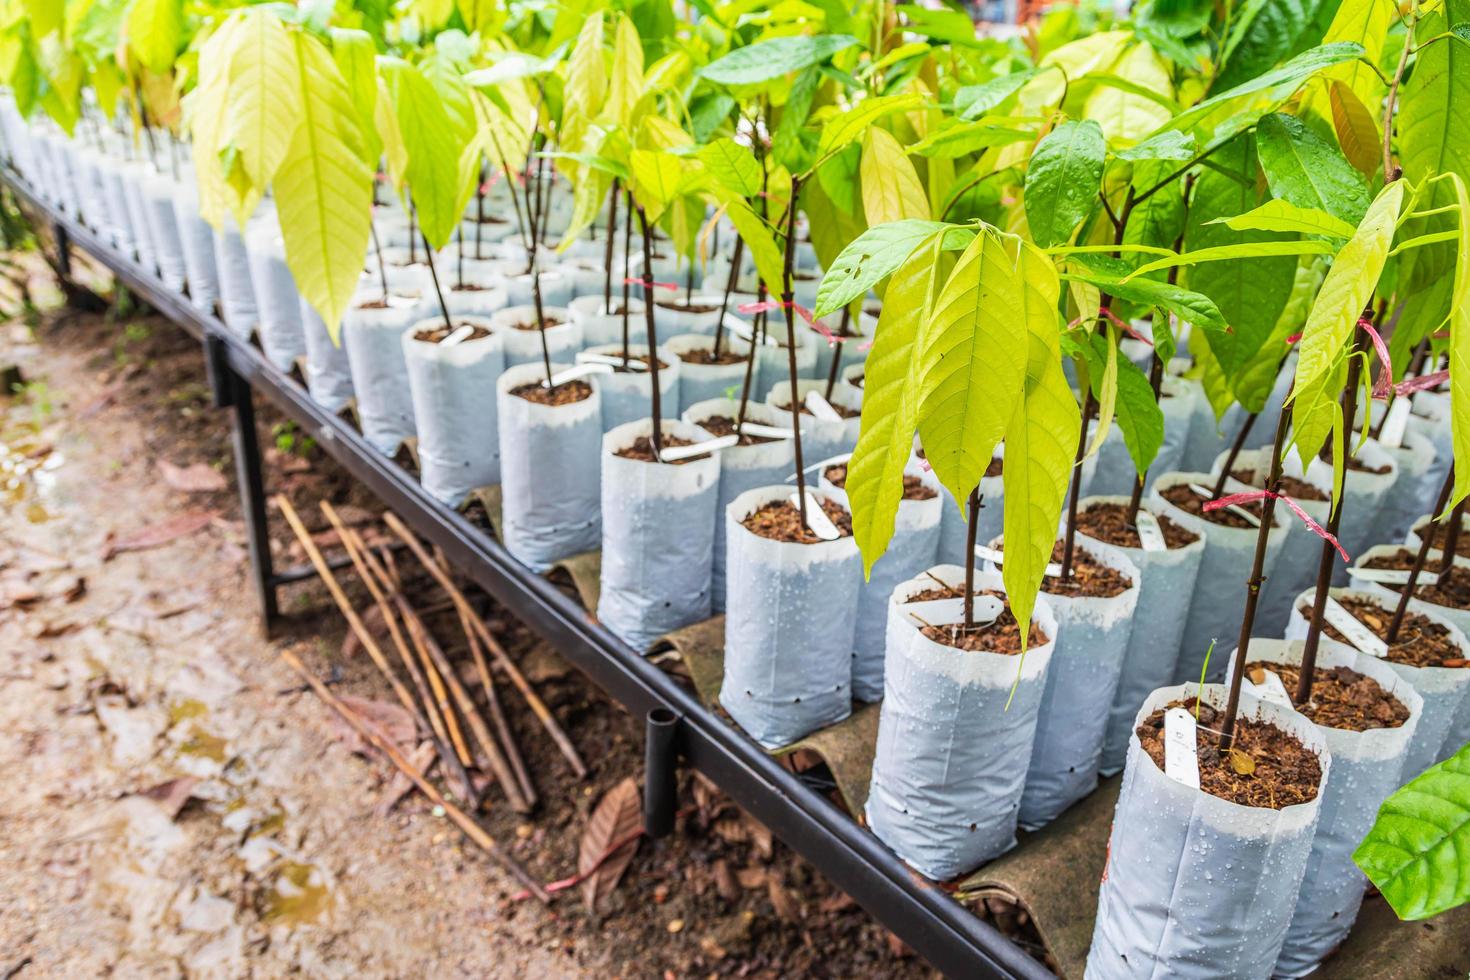 ungt kakaoträd i plantskola foto